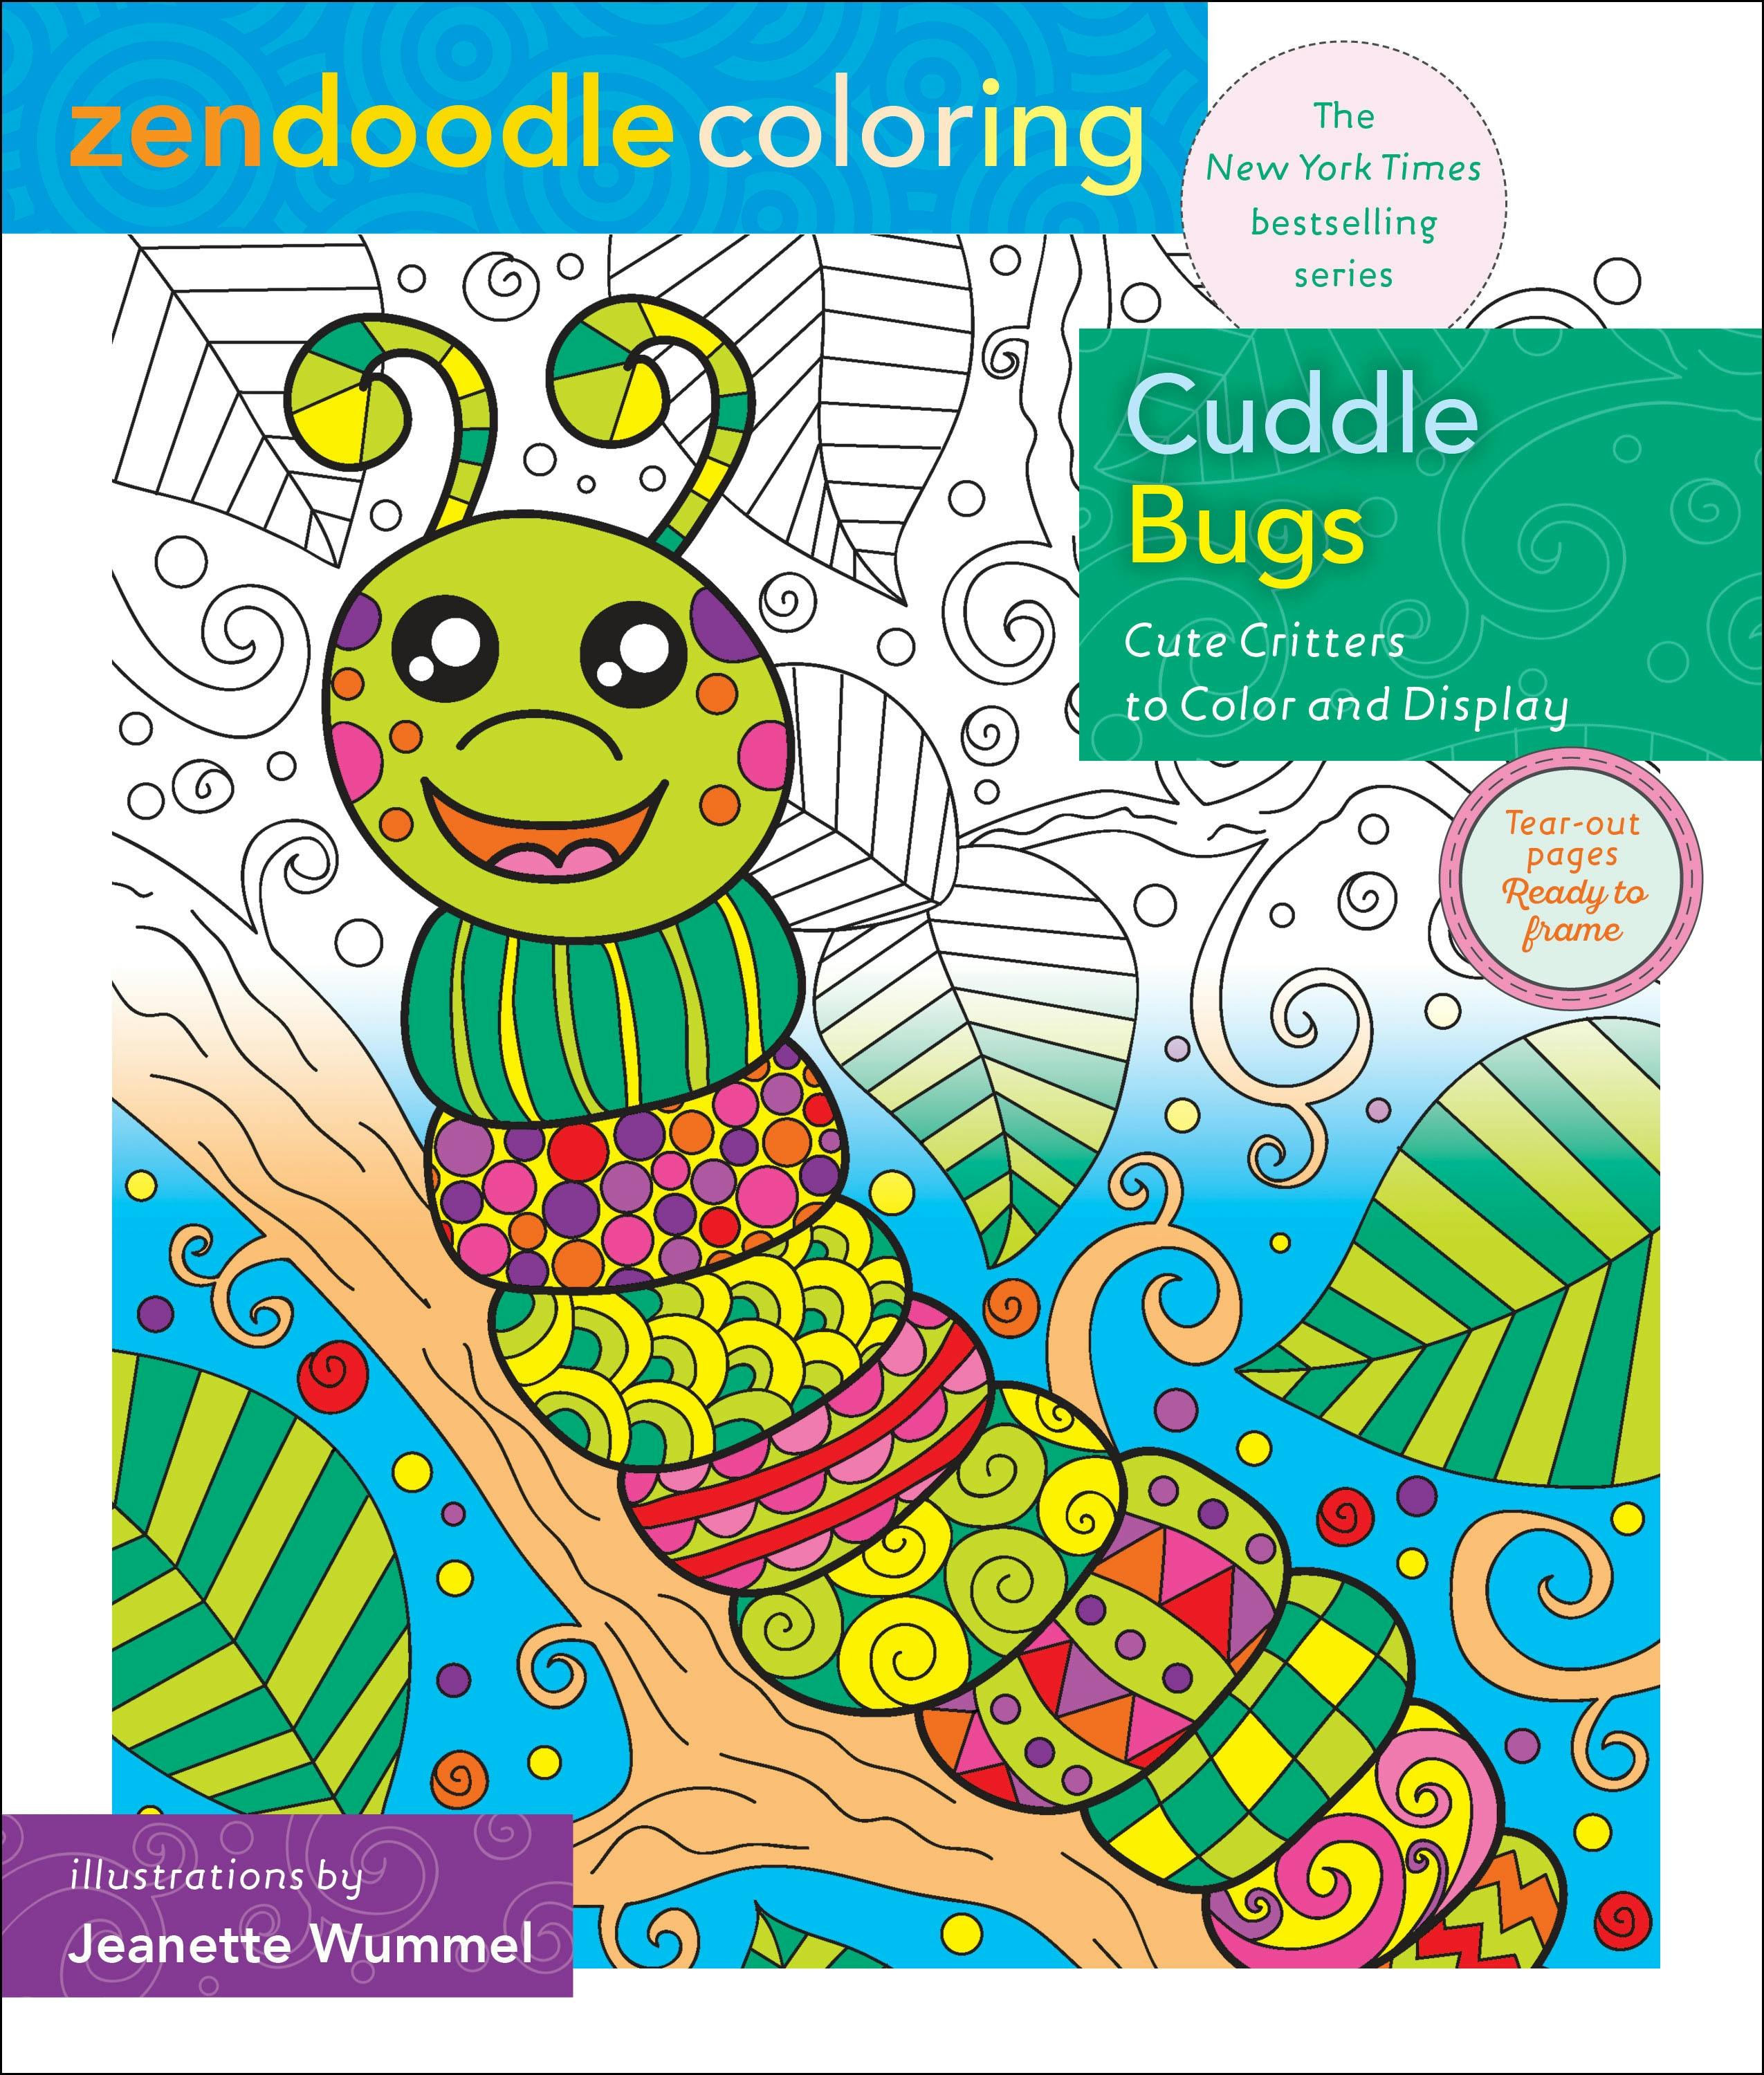 Zendoodle Coloring: Cuddle Bugs